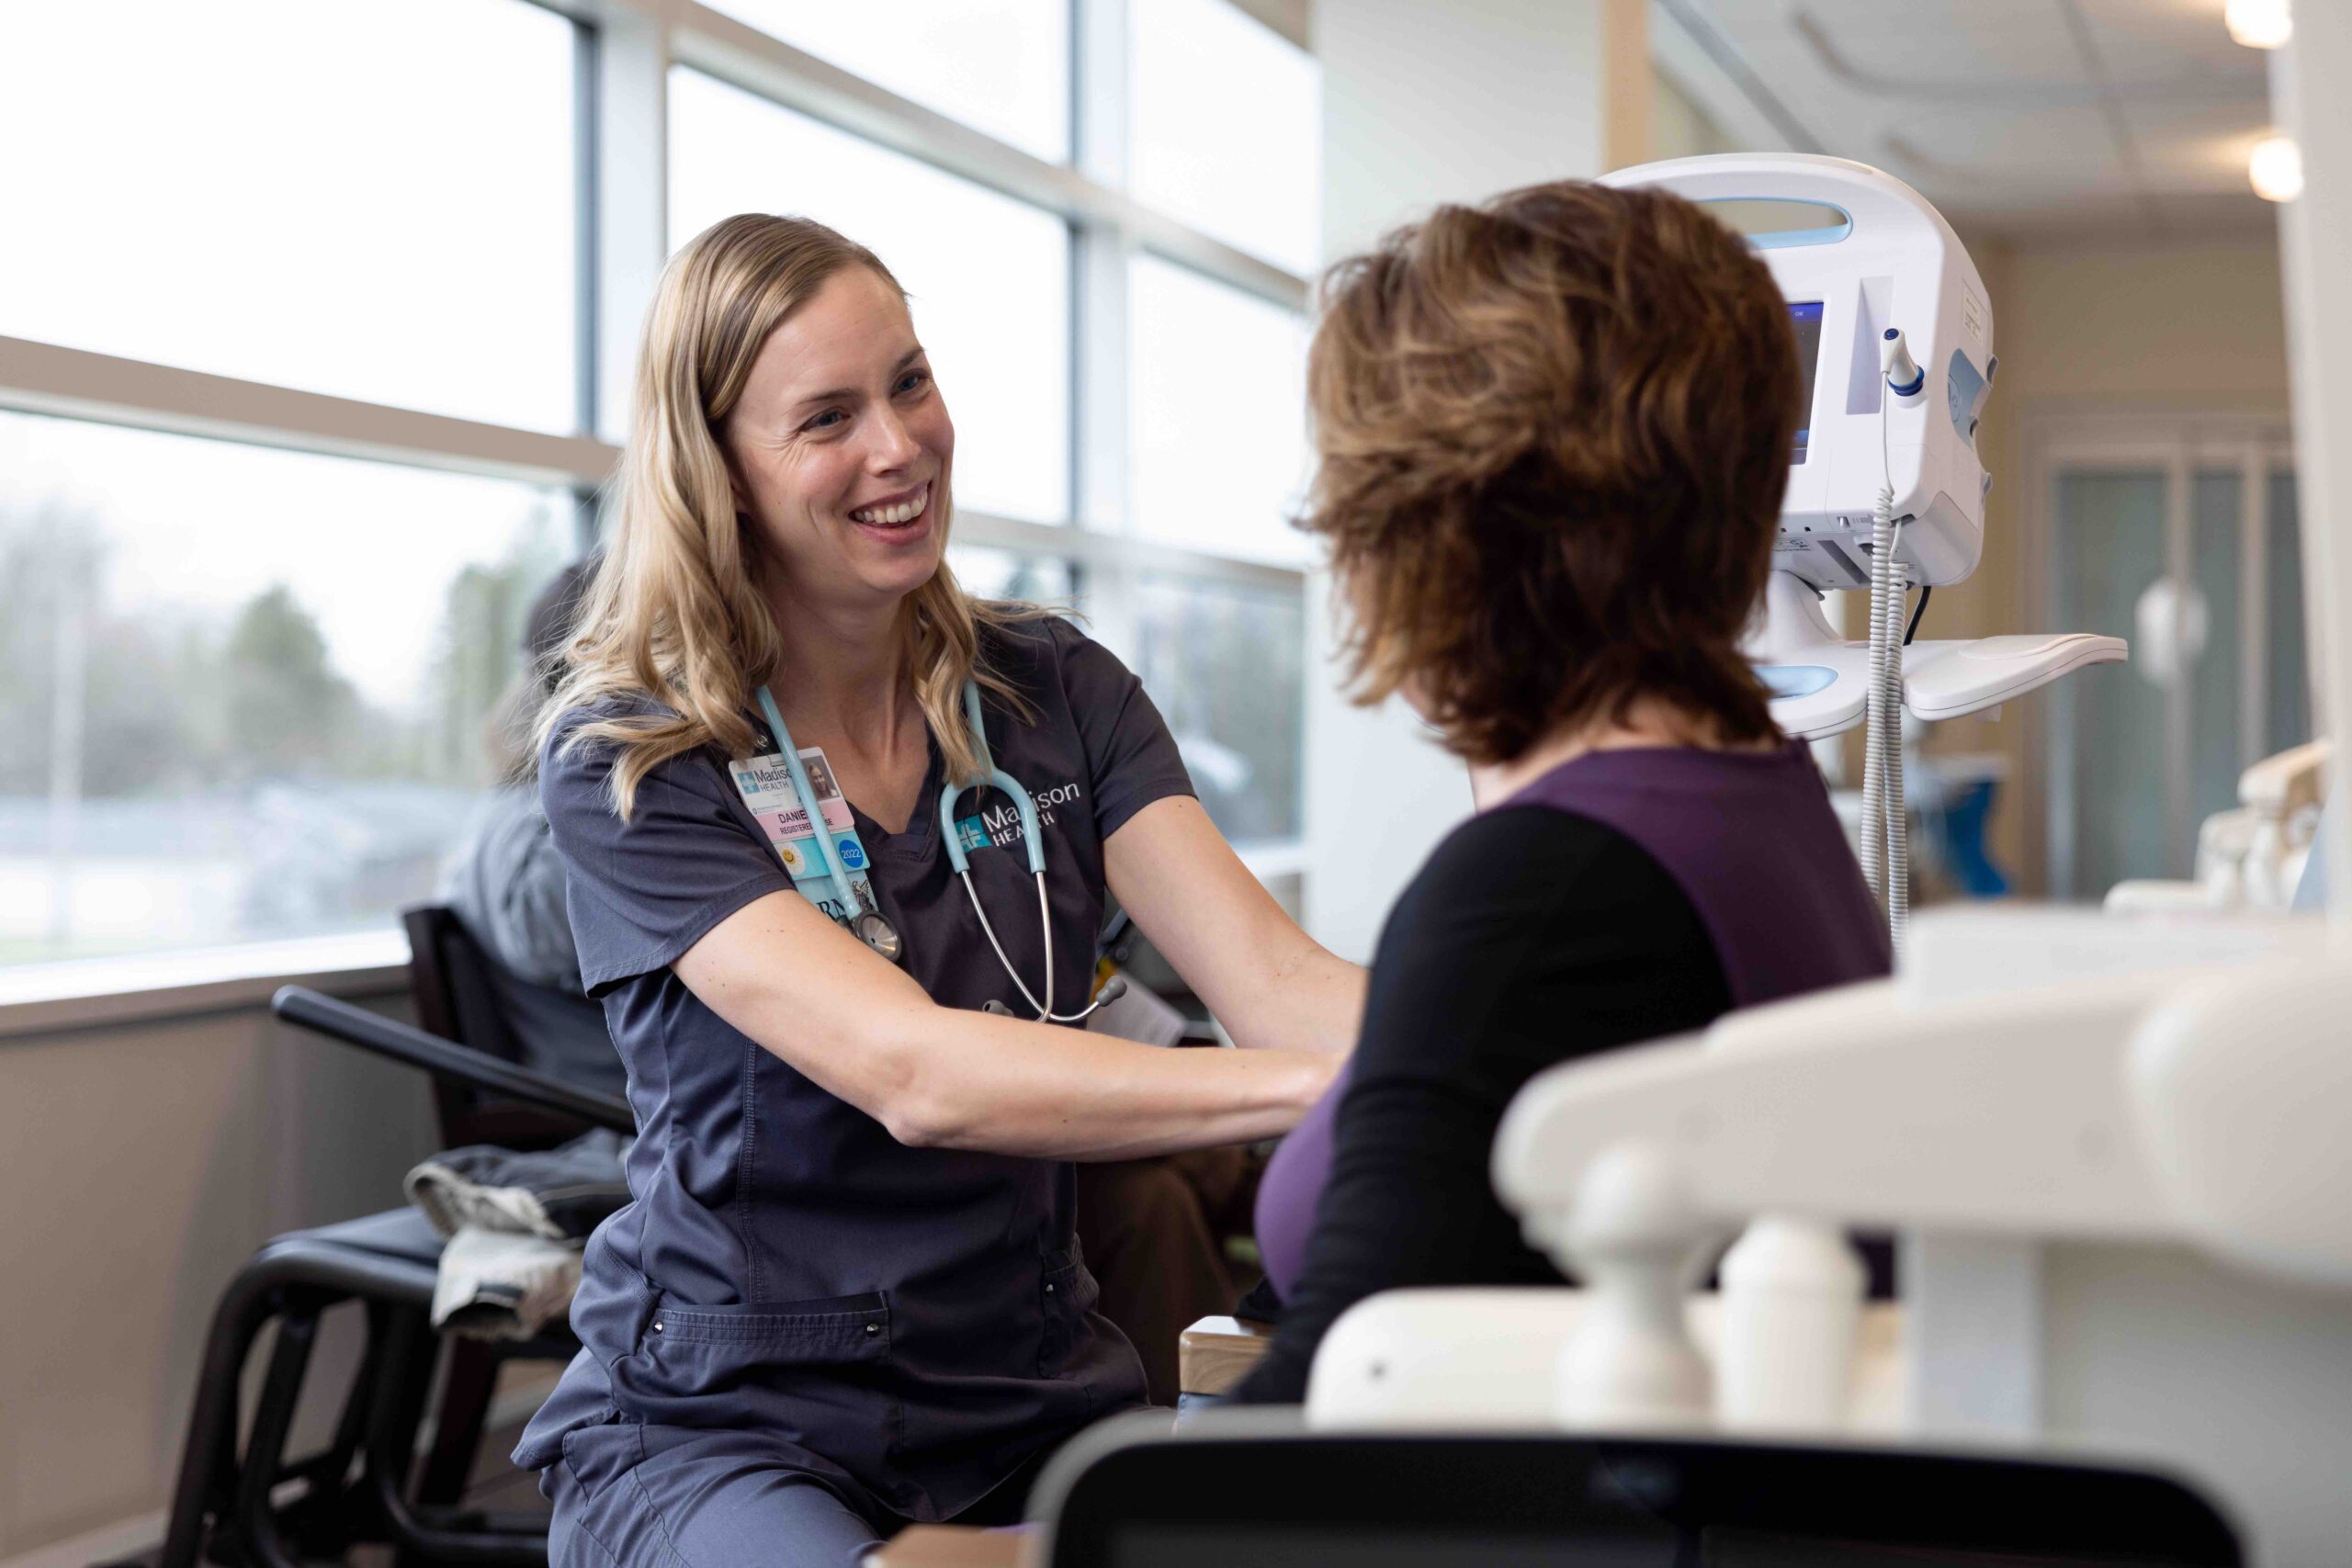 Madison Health Cancer Center nurse smiling at patient